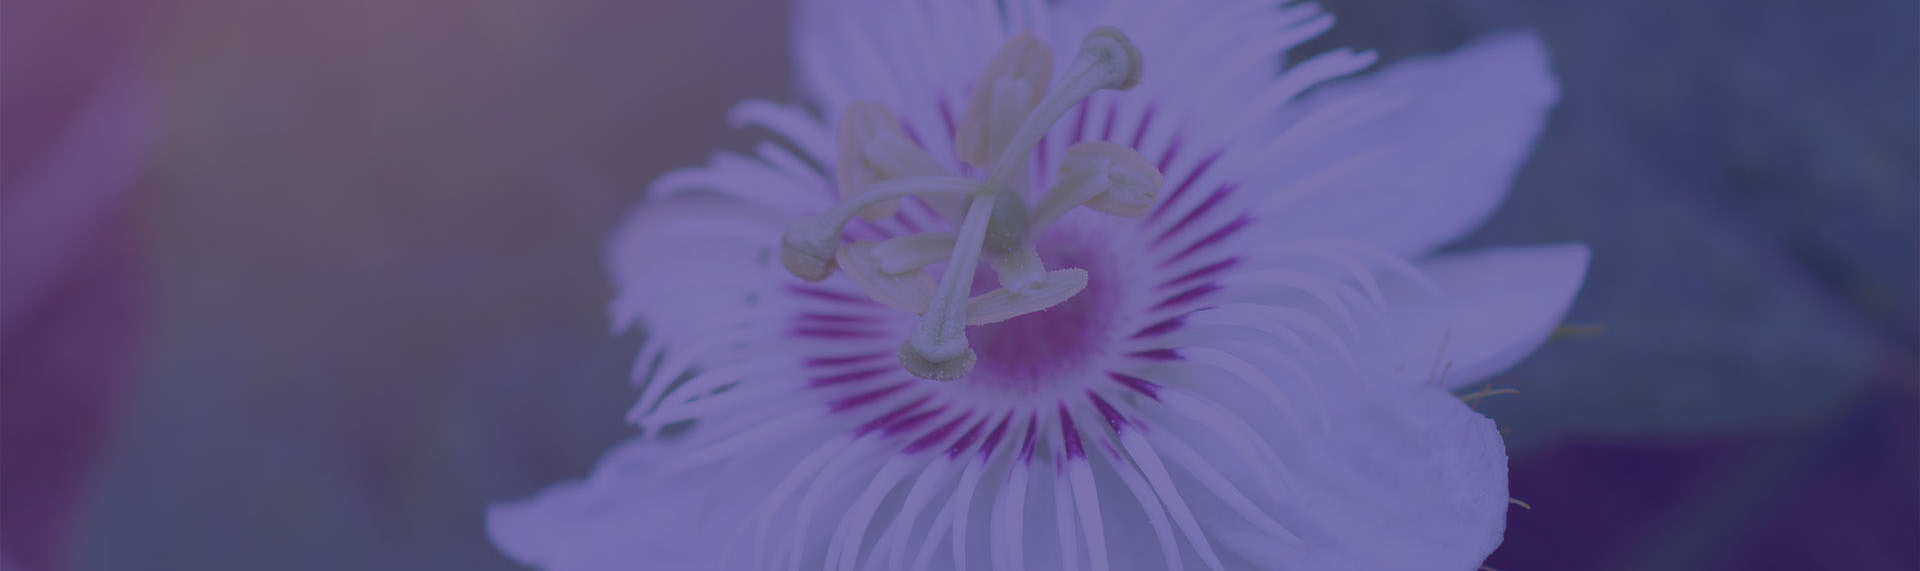 Image of a purple flower